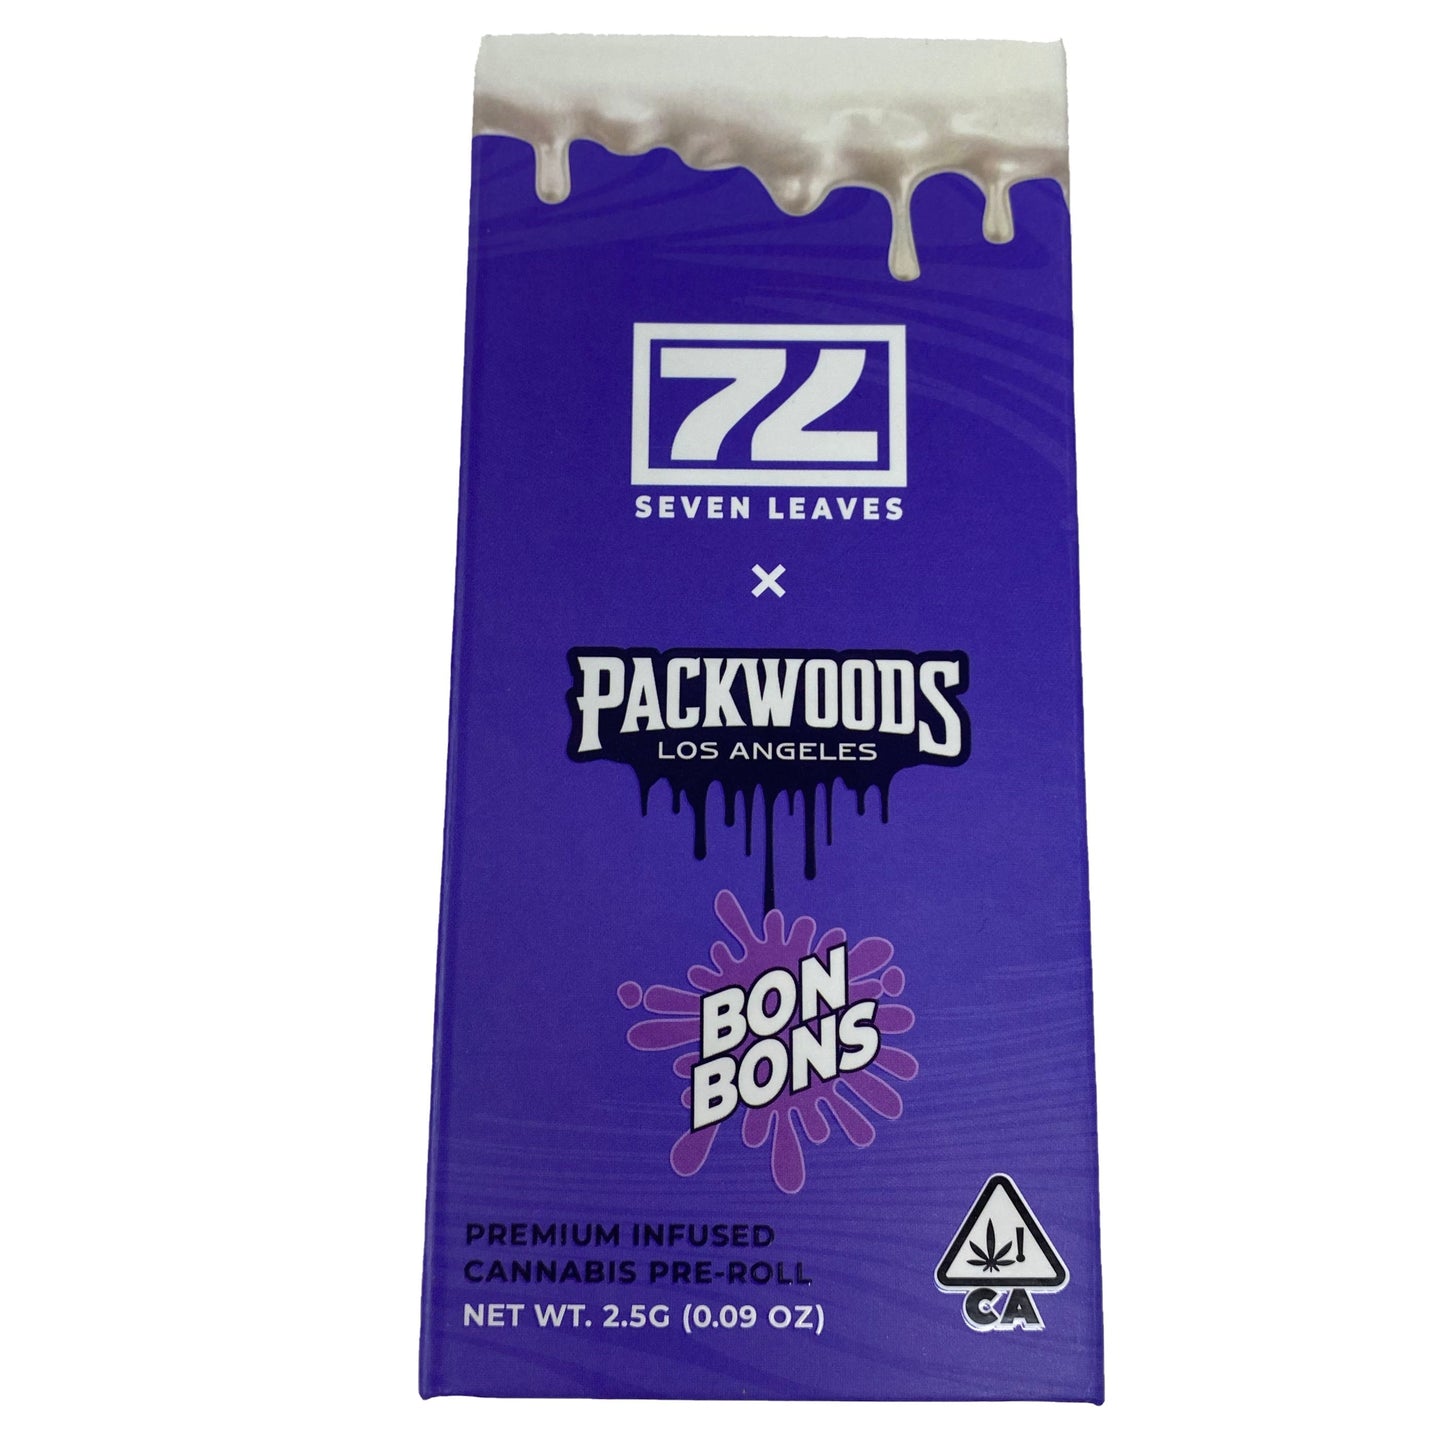 7 Leaves X PACKWOODS Bonbons Pre-roll Tube Packaging